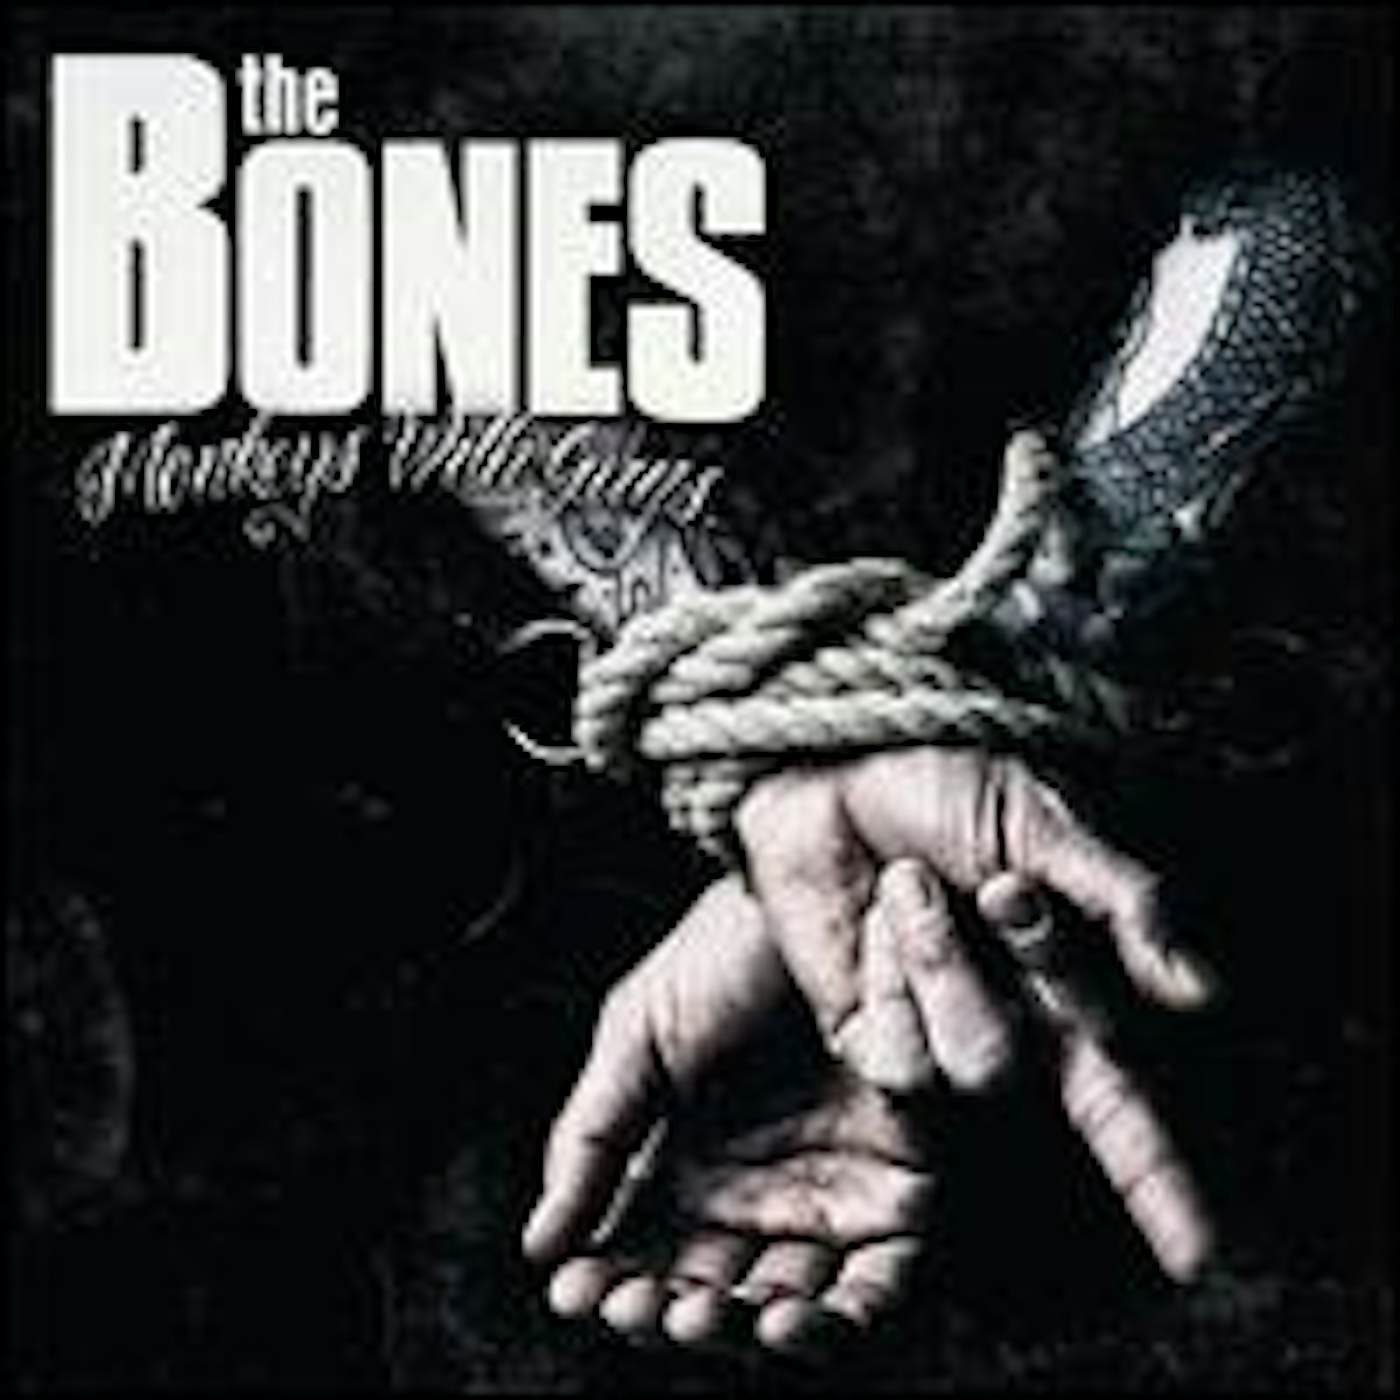 The Bones Monkeys With Guns Vinyl Record